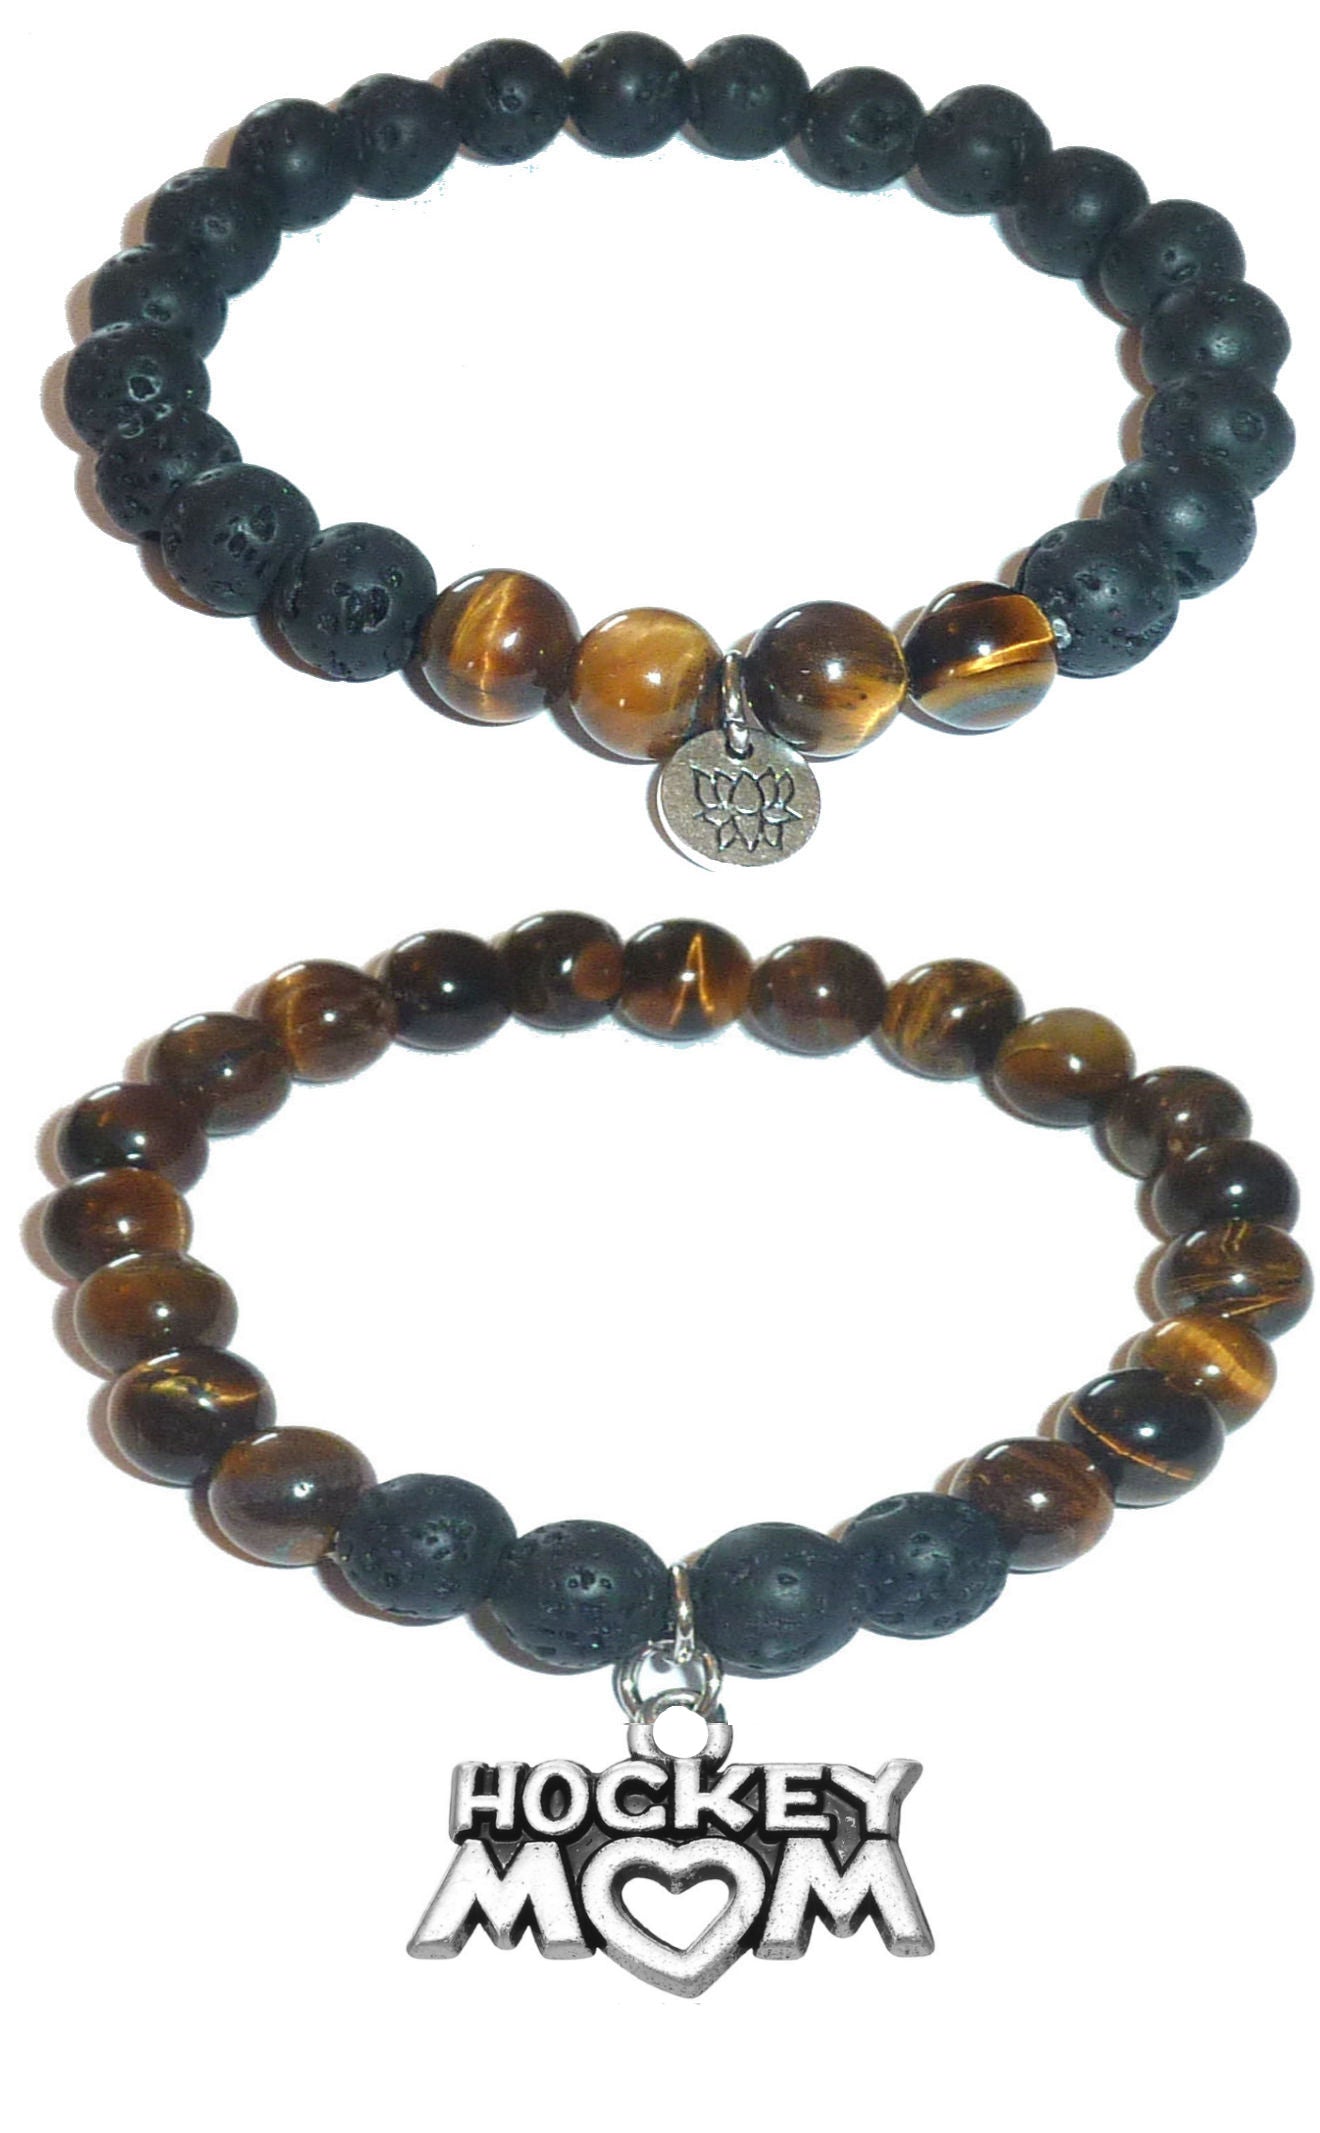 Hockey Mom - Women's Tiger Eye & Black Lava Diffuser Yoga Beads Charm Stretch Bracelet Gift Set